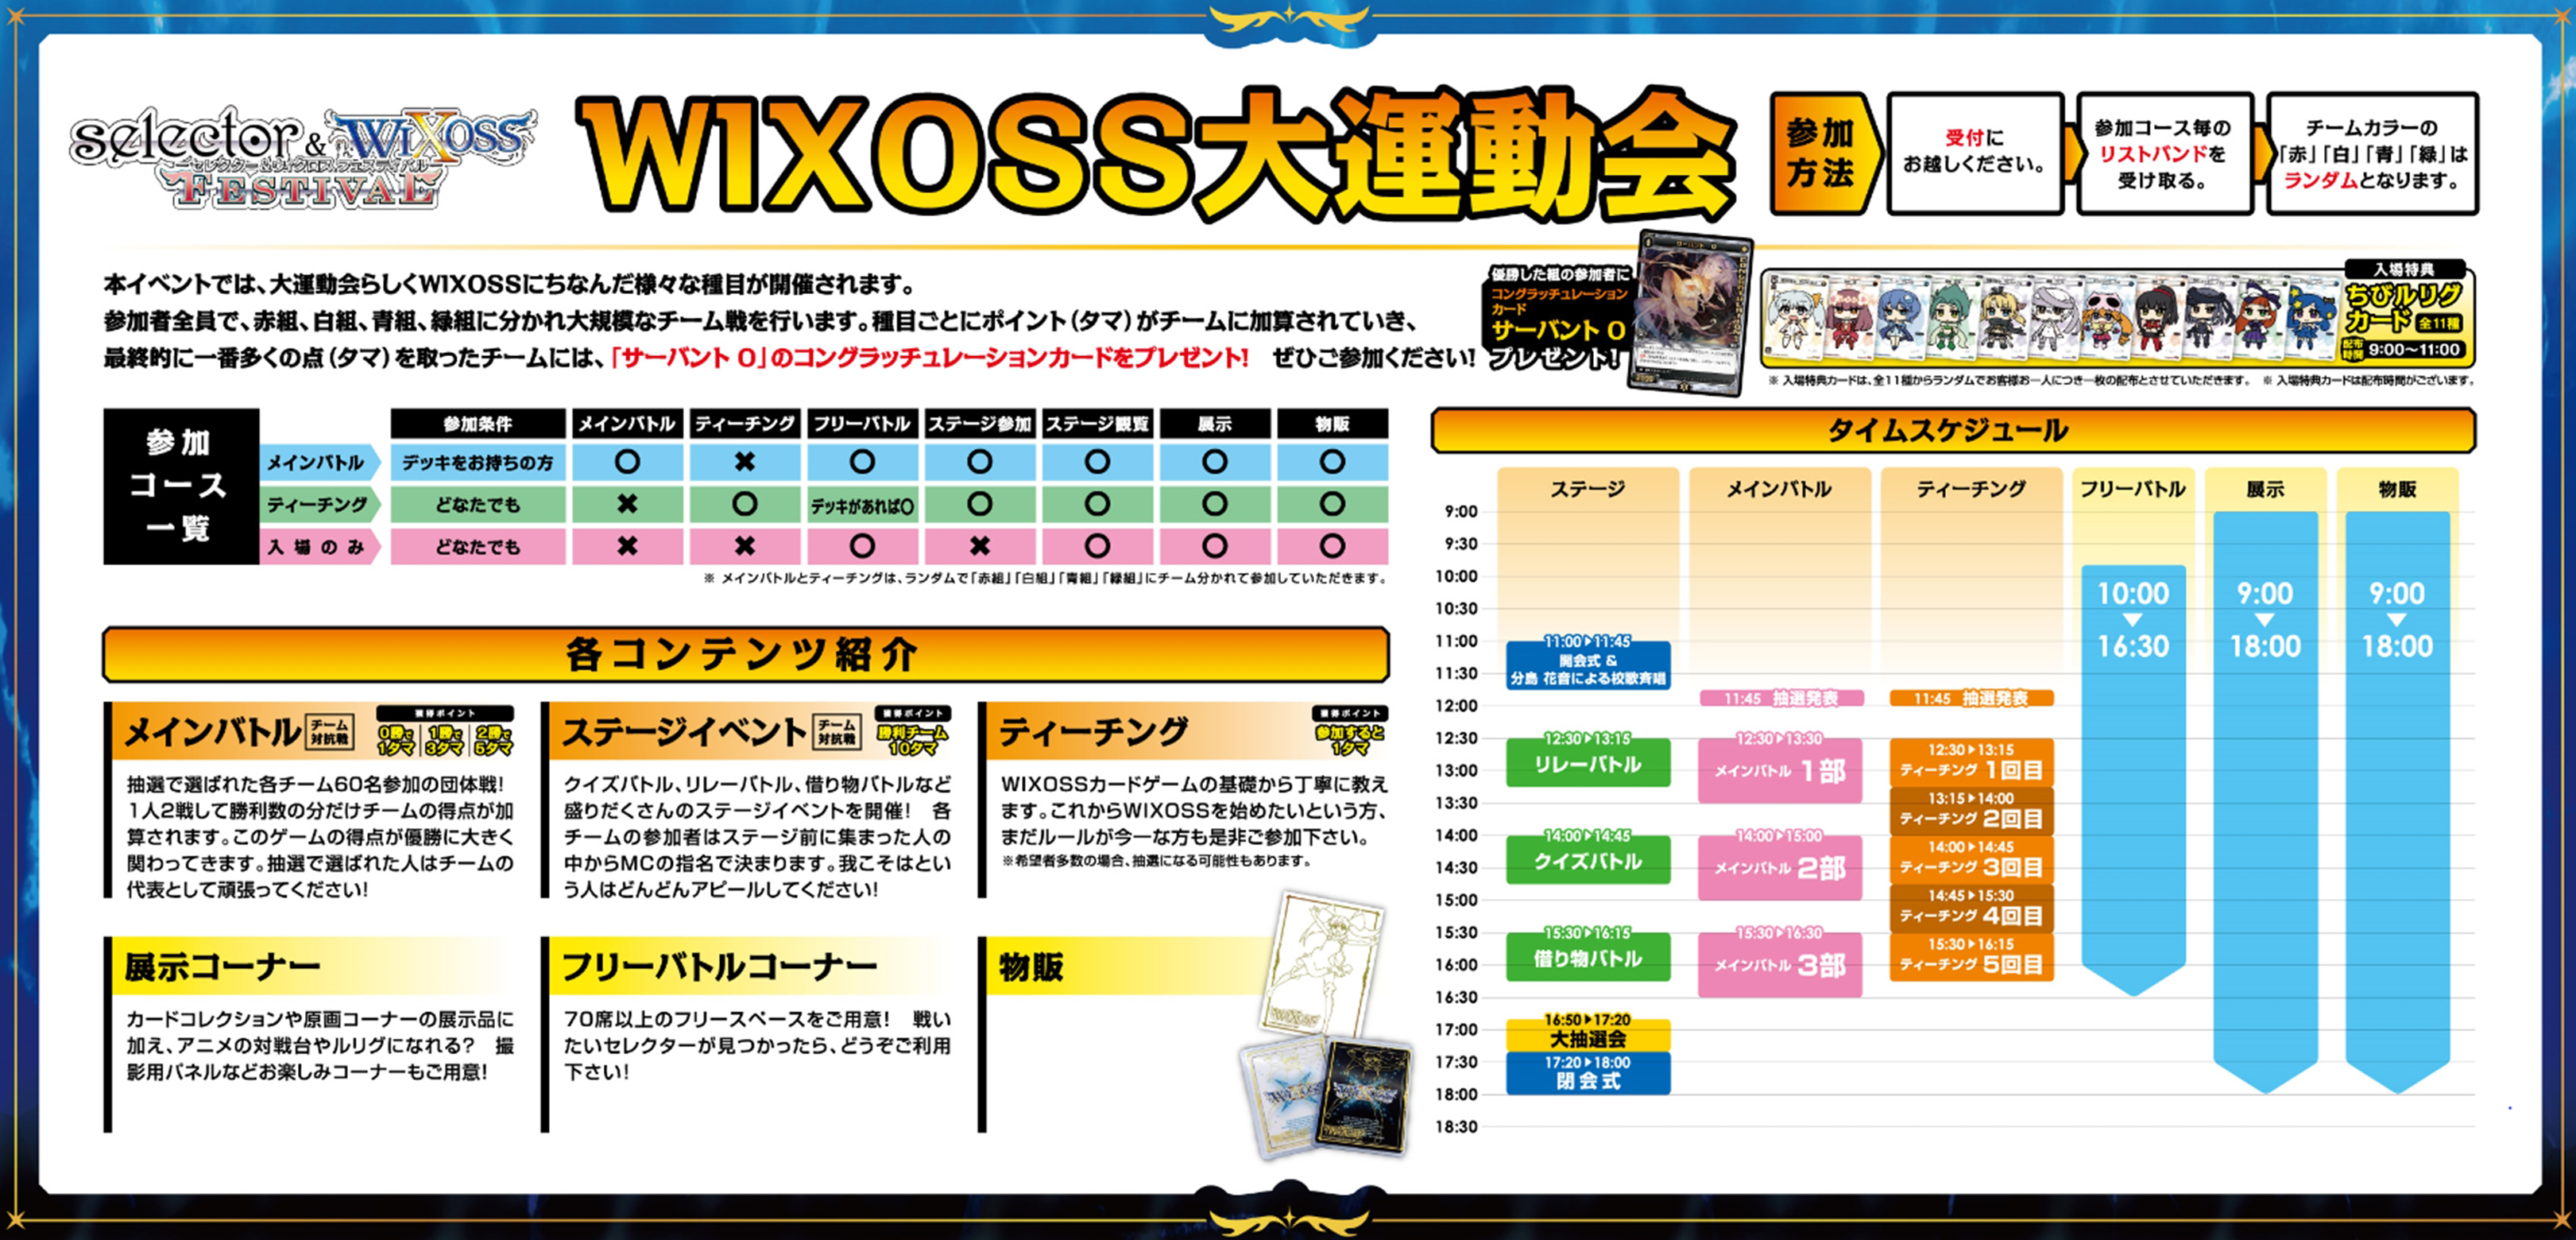 Wixoss大運動会 開催 Wixoss ウィクロス タカラトミー